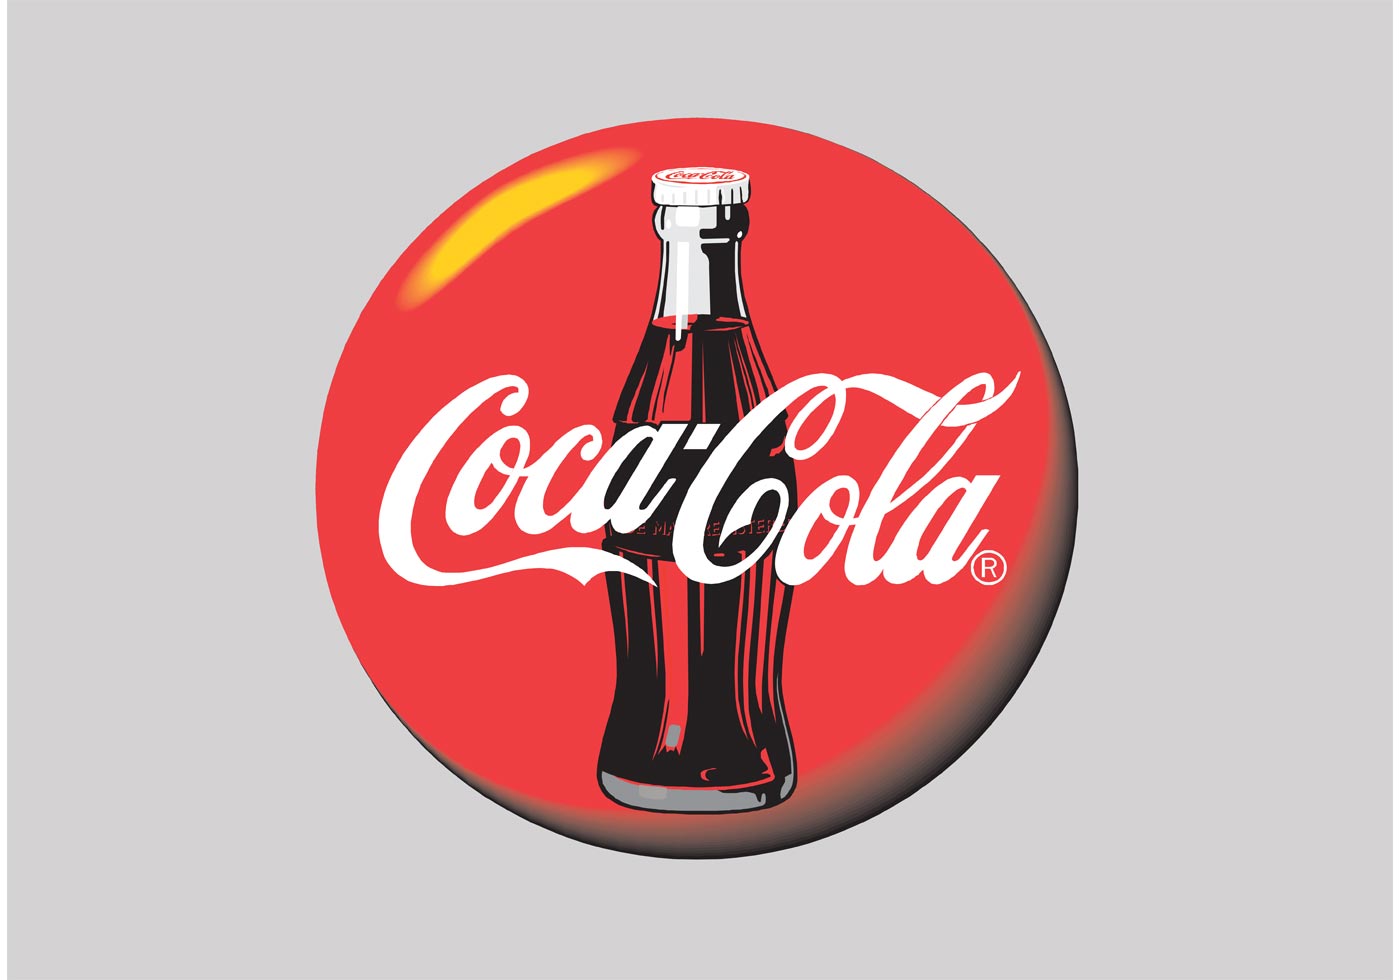 Details 100 el logo de coca cola - Abzlocal.mx